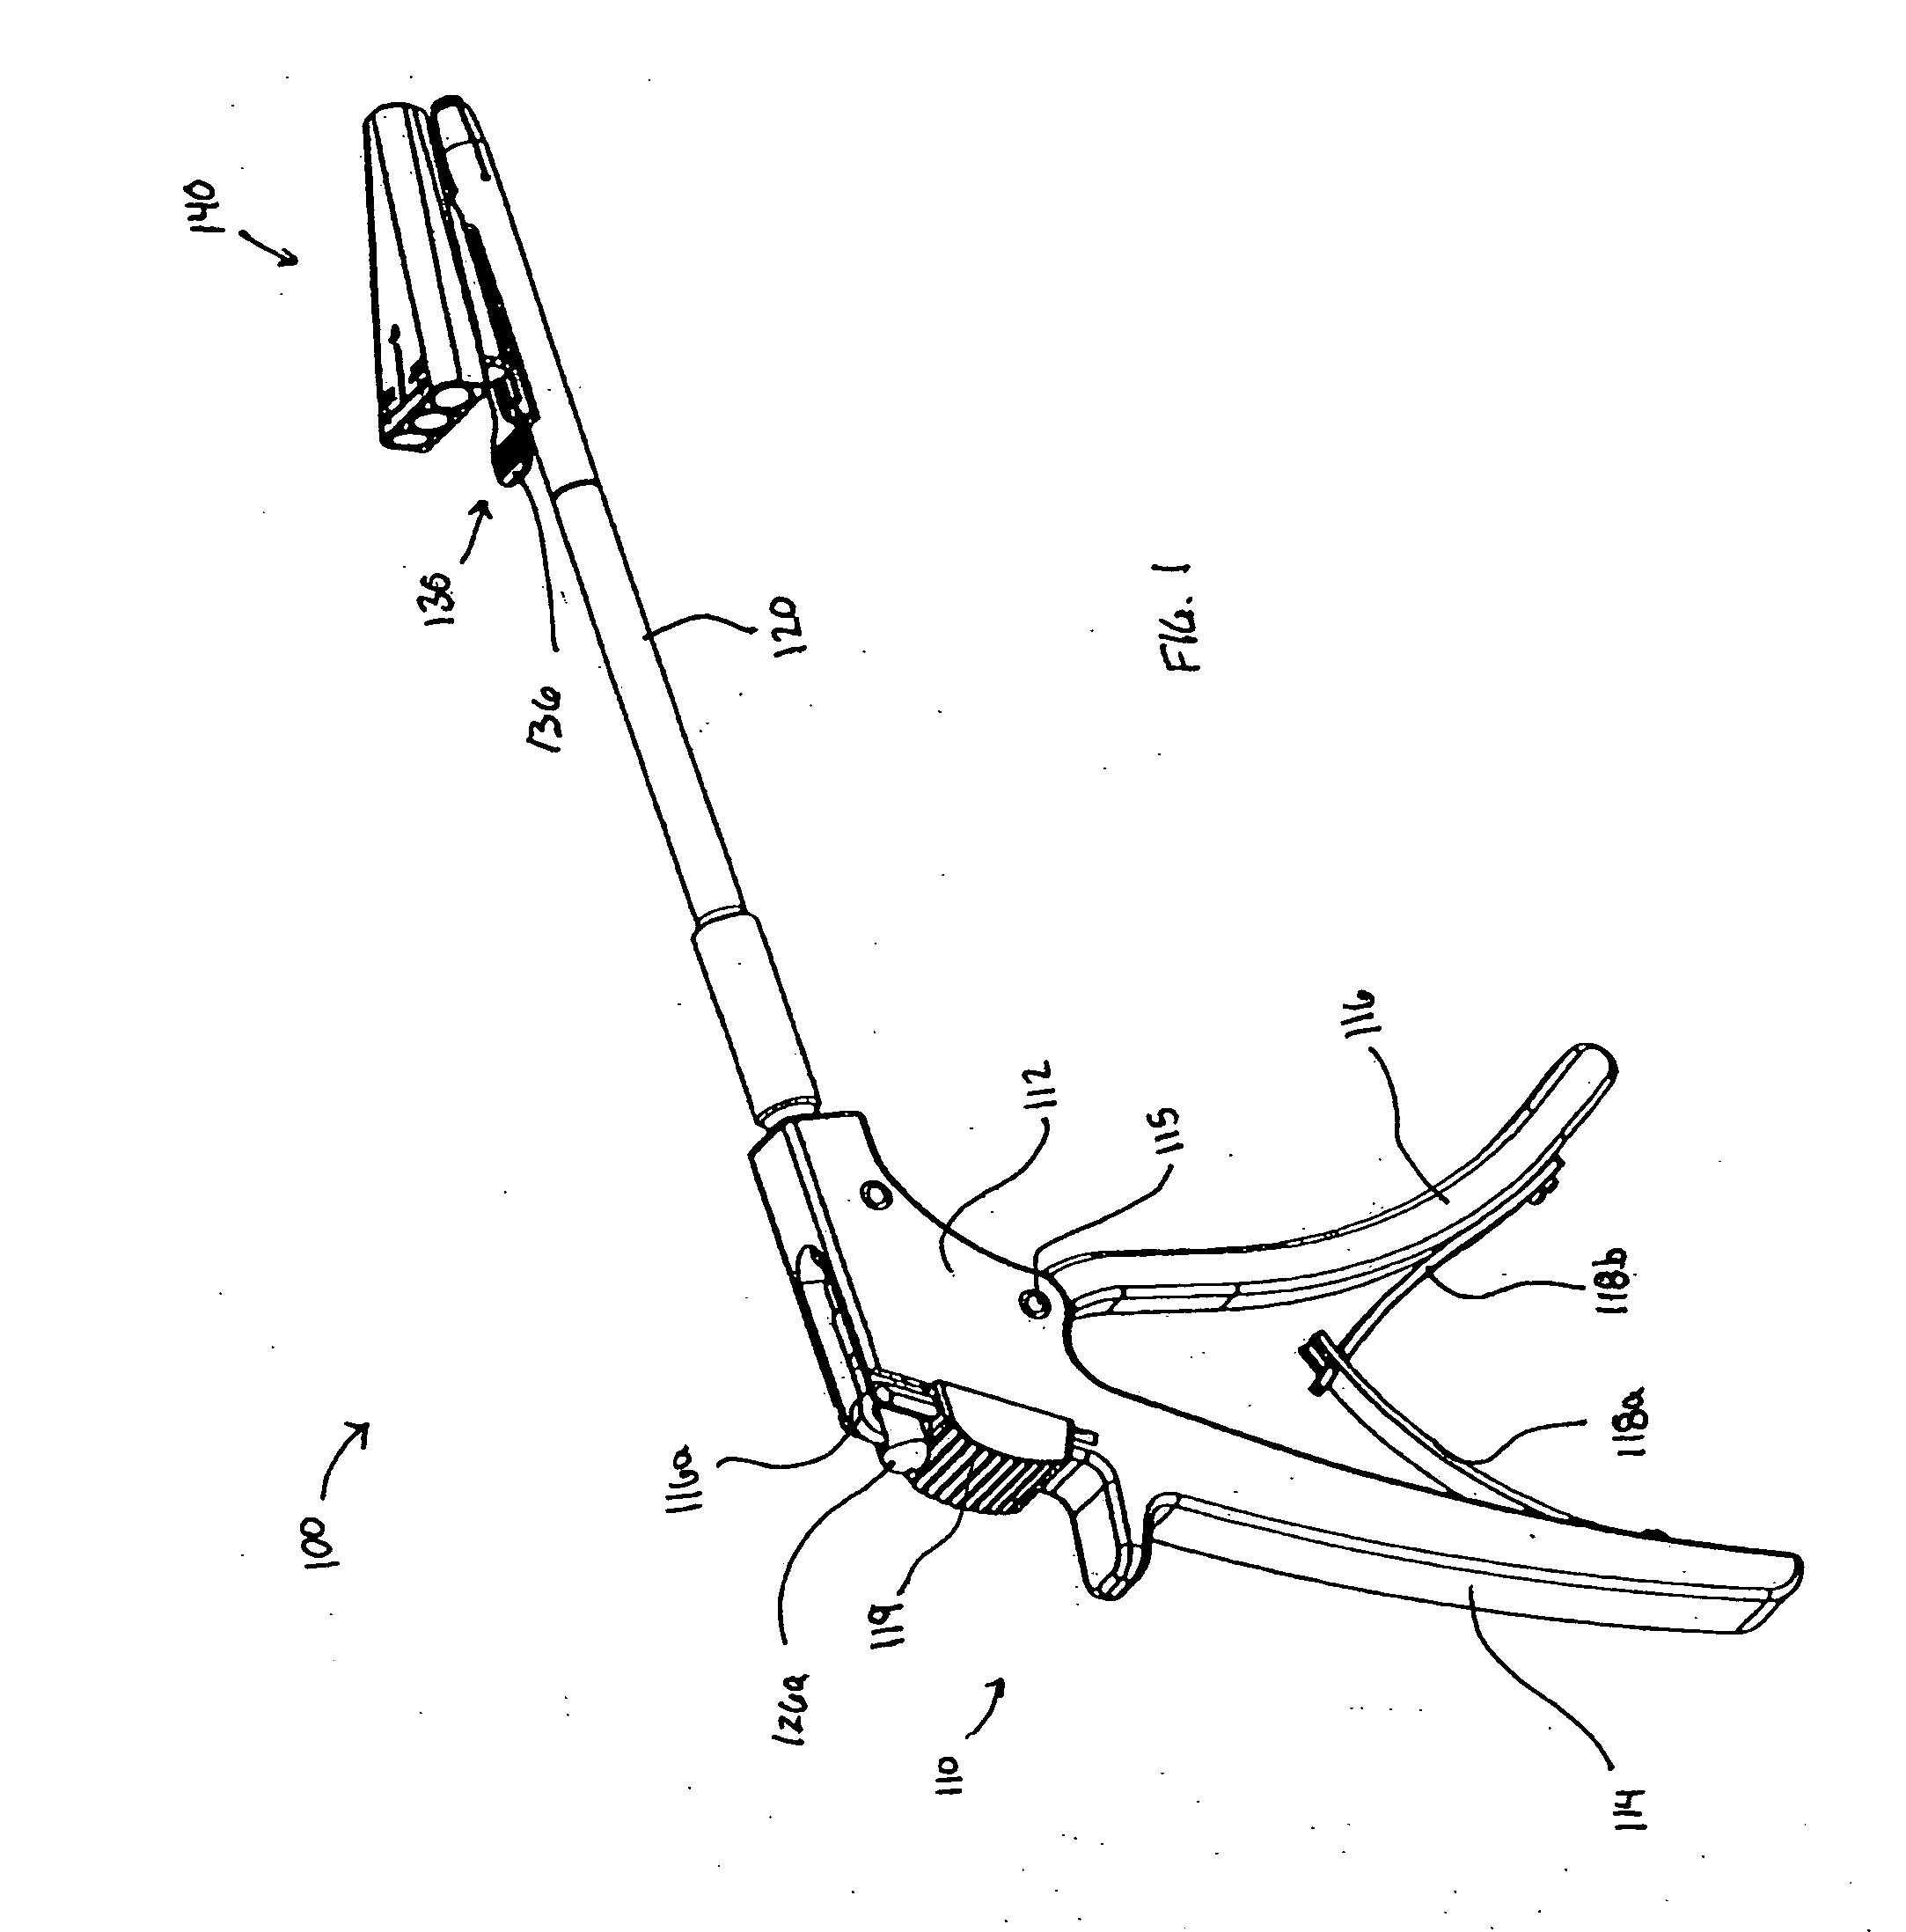 Cervical drill guide apparatus